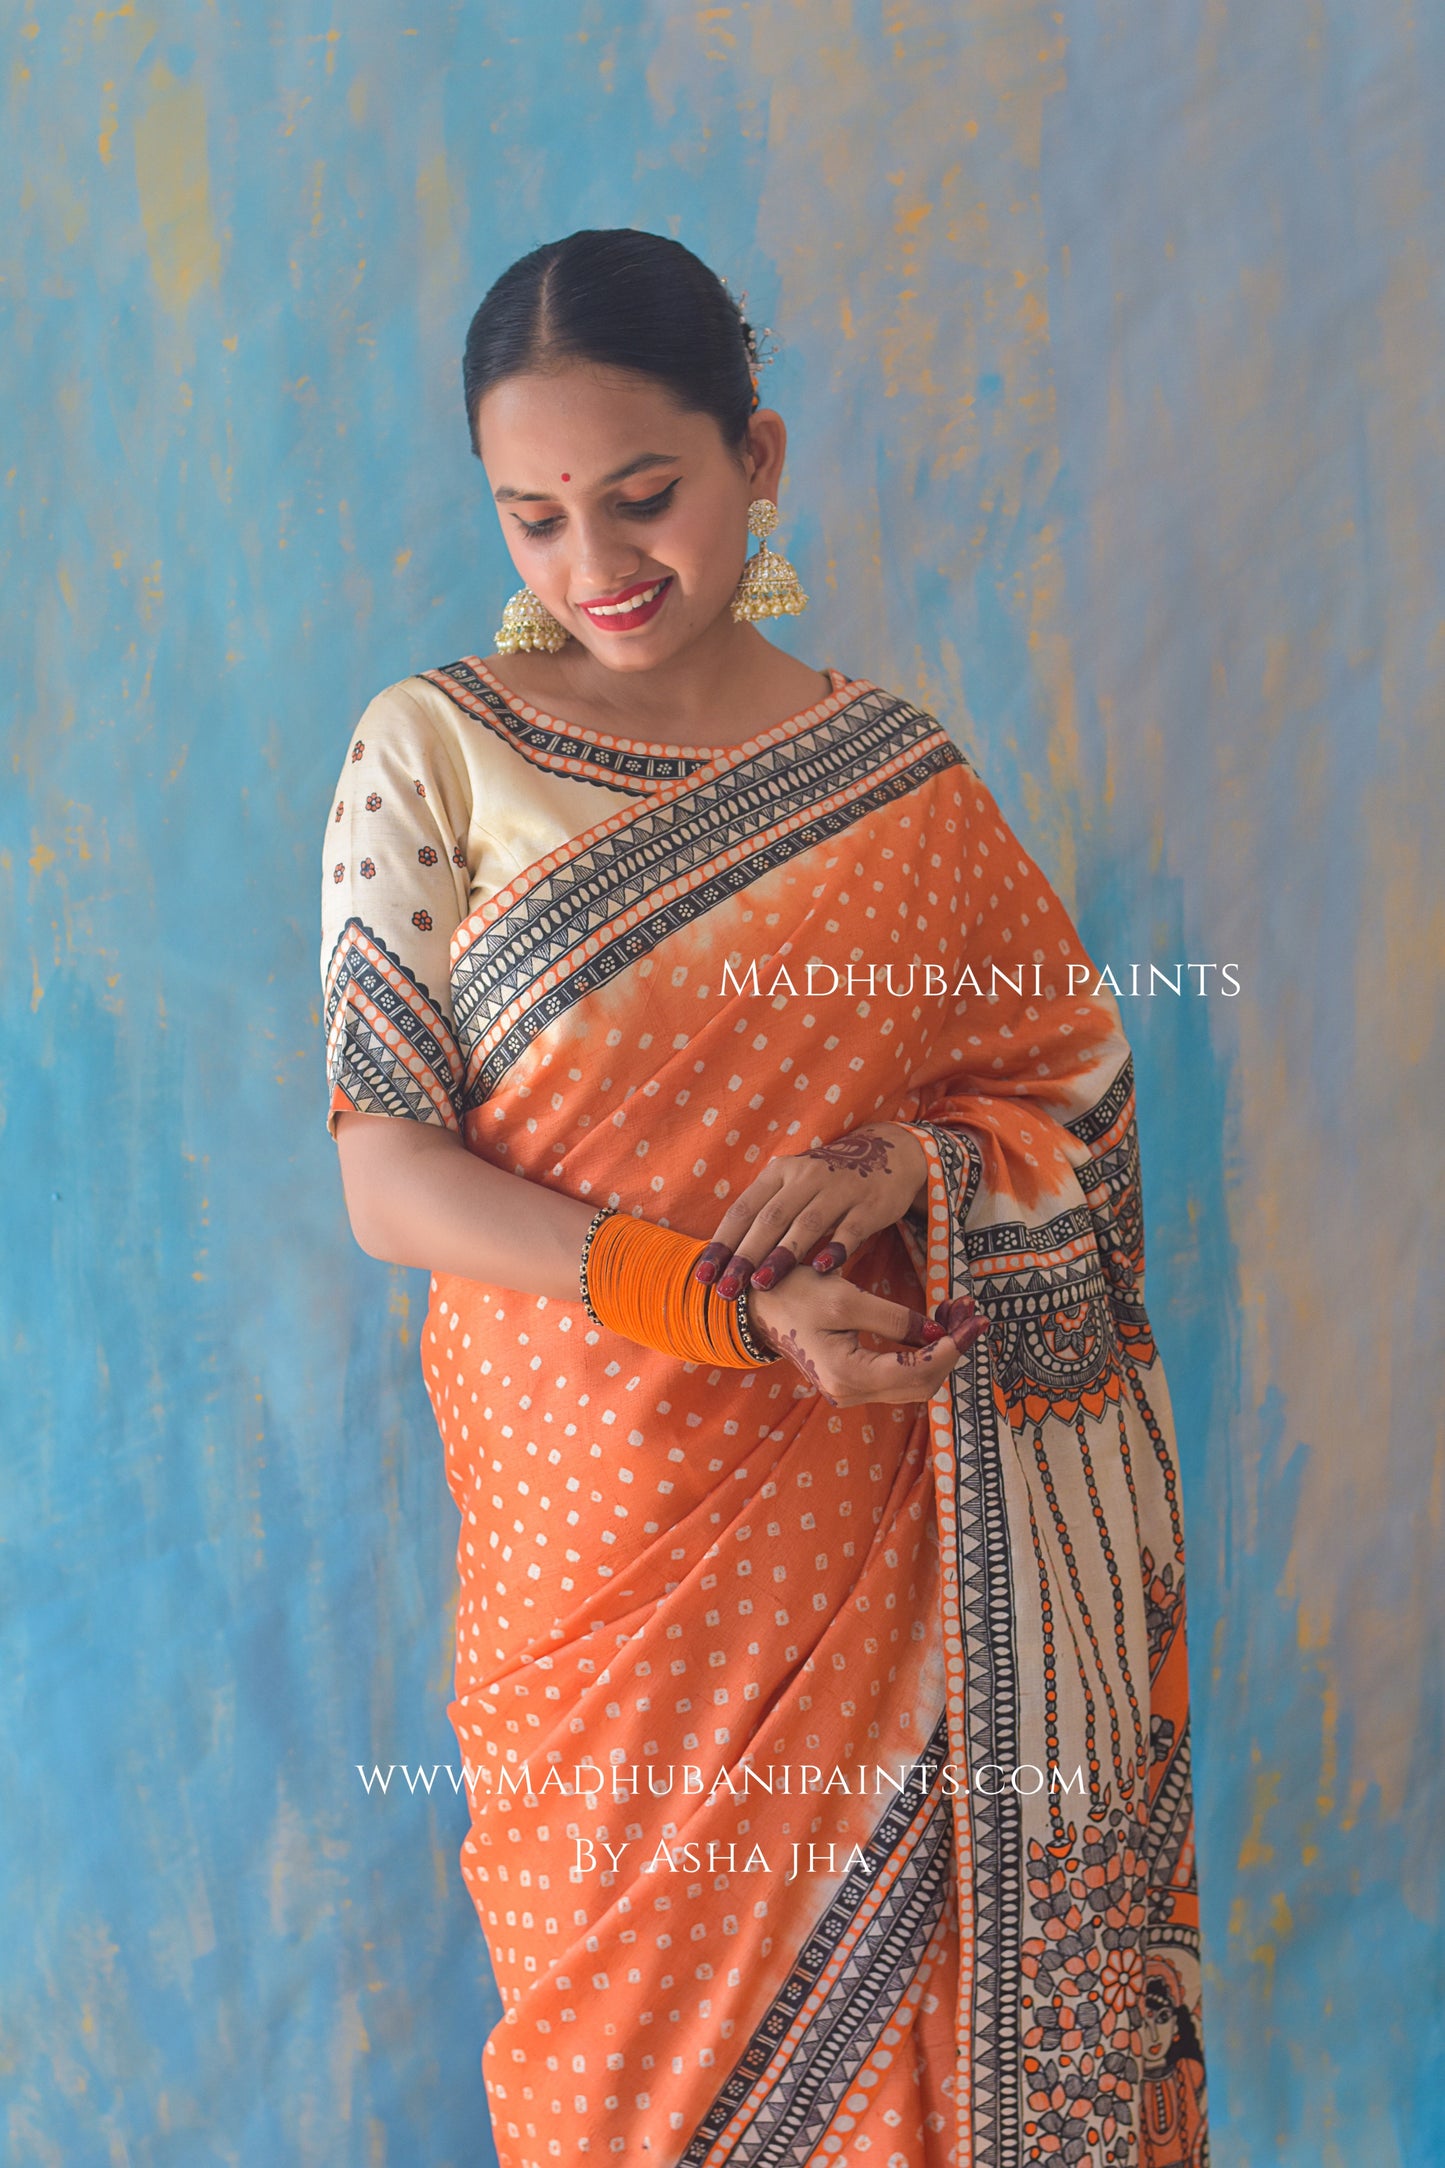 KAMLAKSHI Hand-painted Madhubani Bandhini Tussar Silk Saree